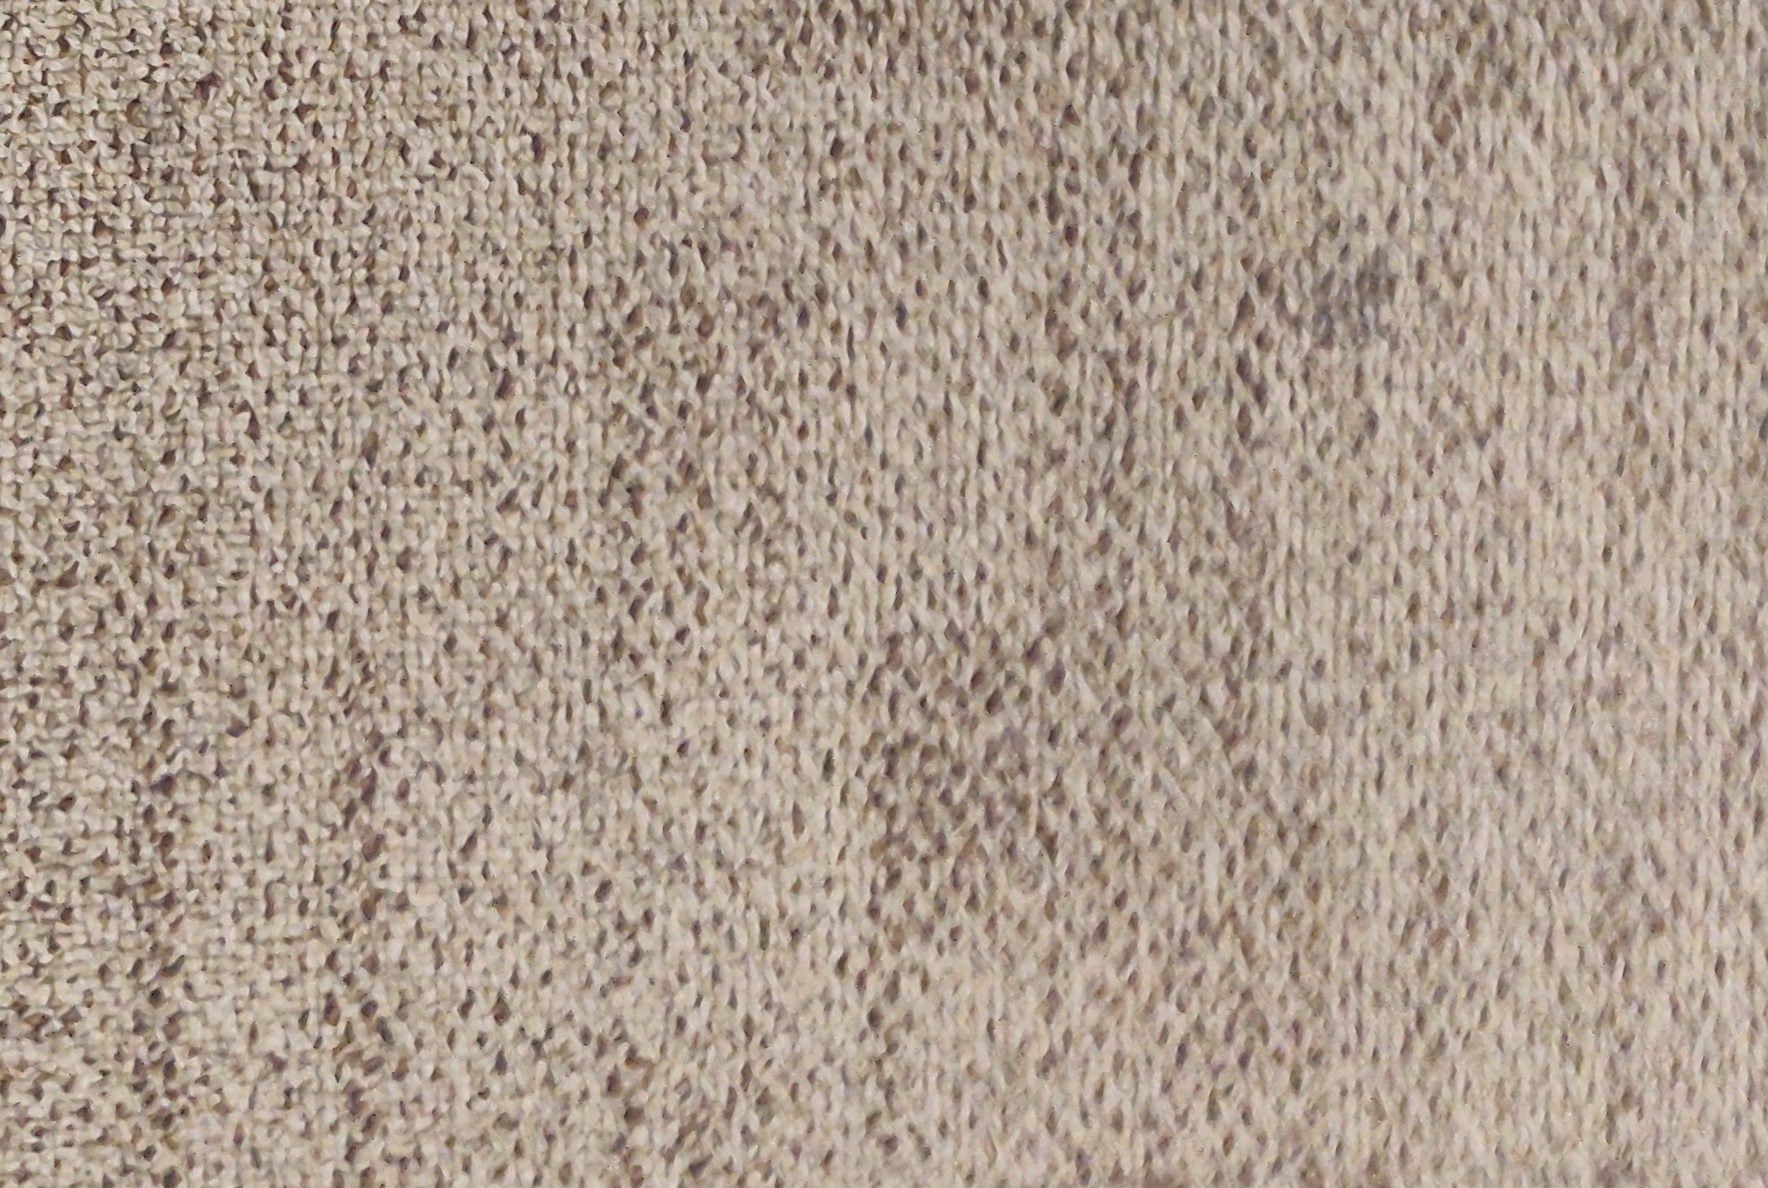 Brown rug texture